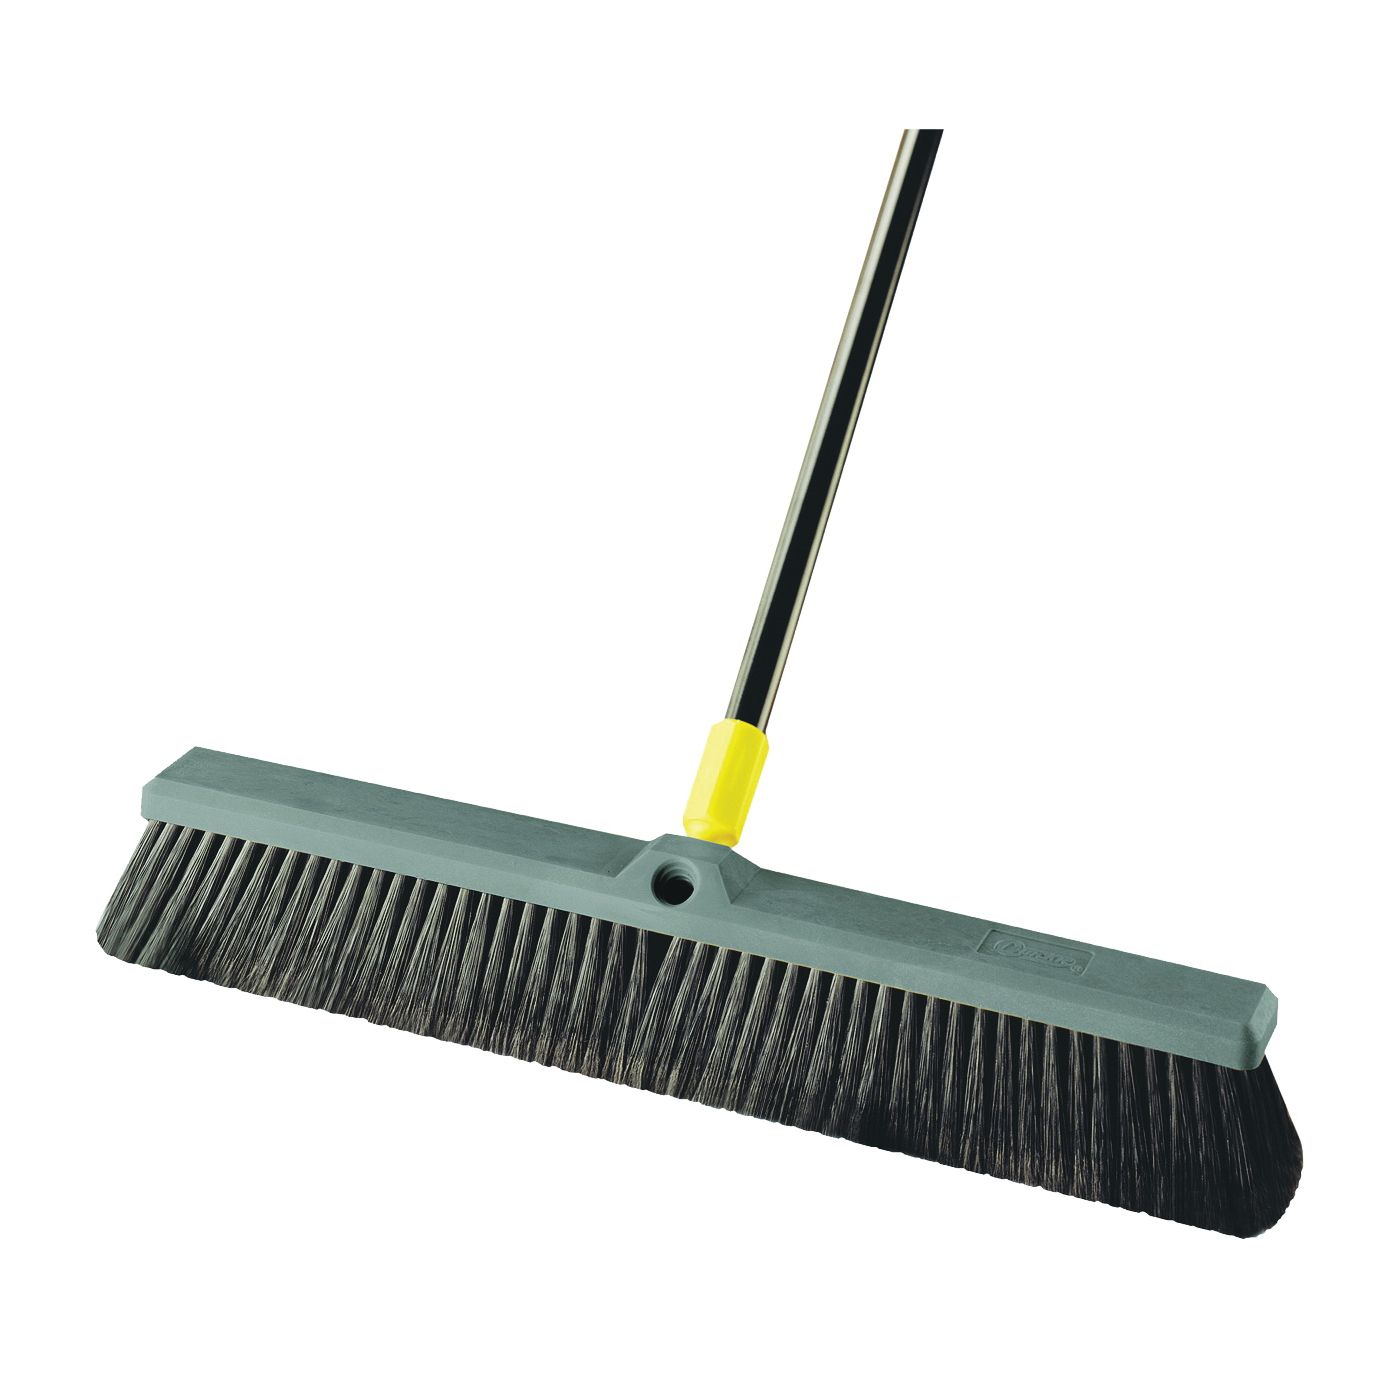 00533 Push Broom, 24 in Sweep Face, Polypropylene Bristle, Steel Handle